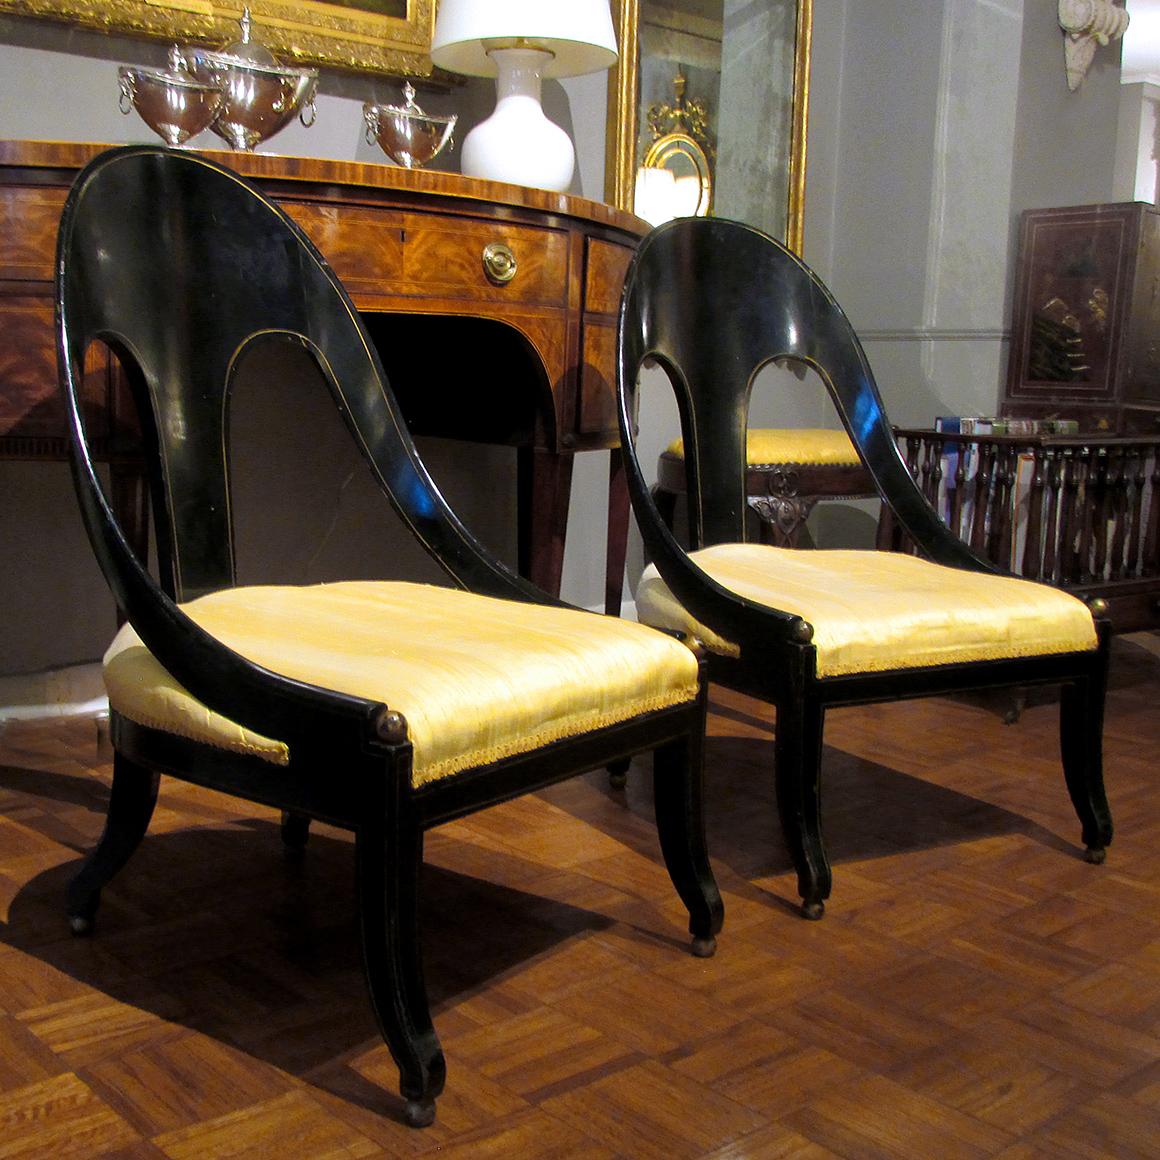 Irish Pair of Early 19th Century Regency Ebonized and Gilt Spoon Back Slipper Chairs